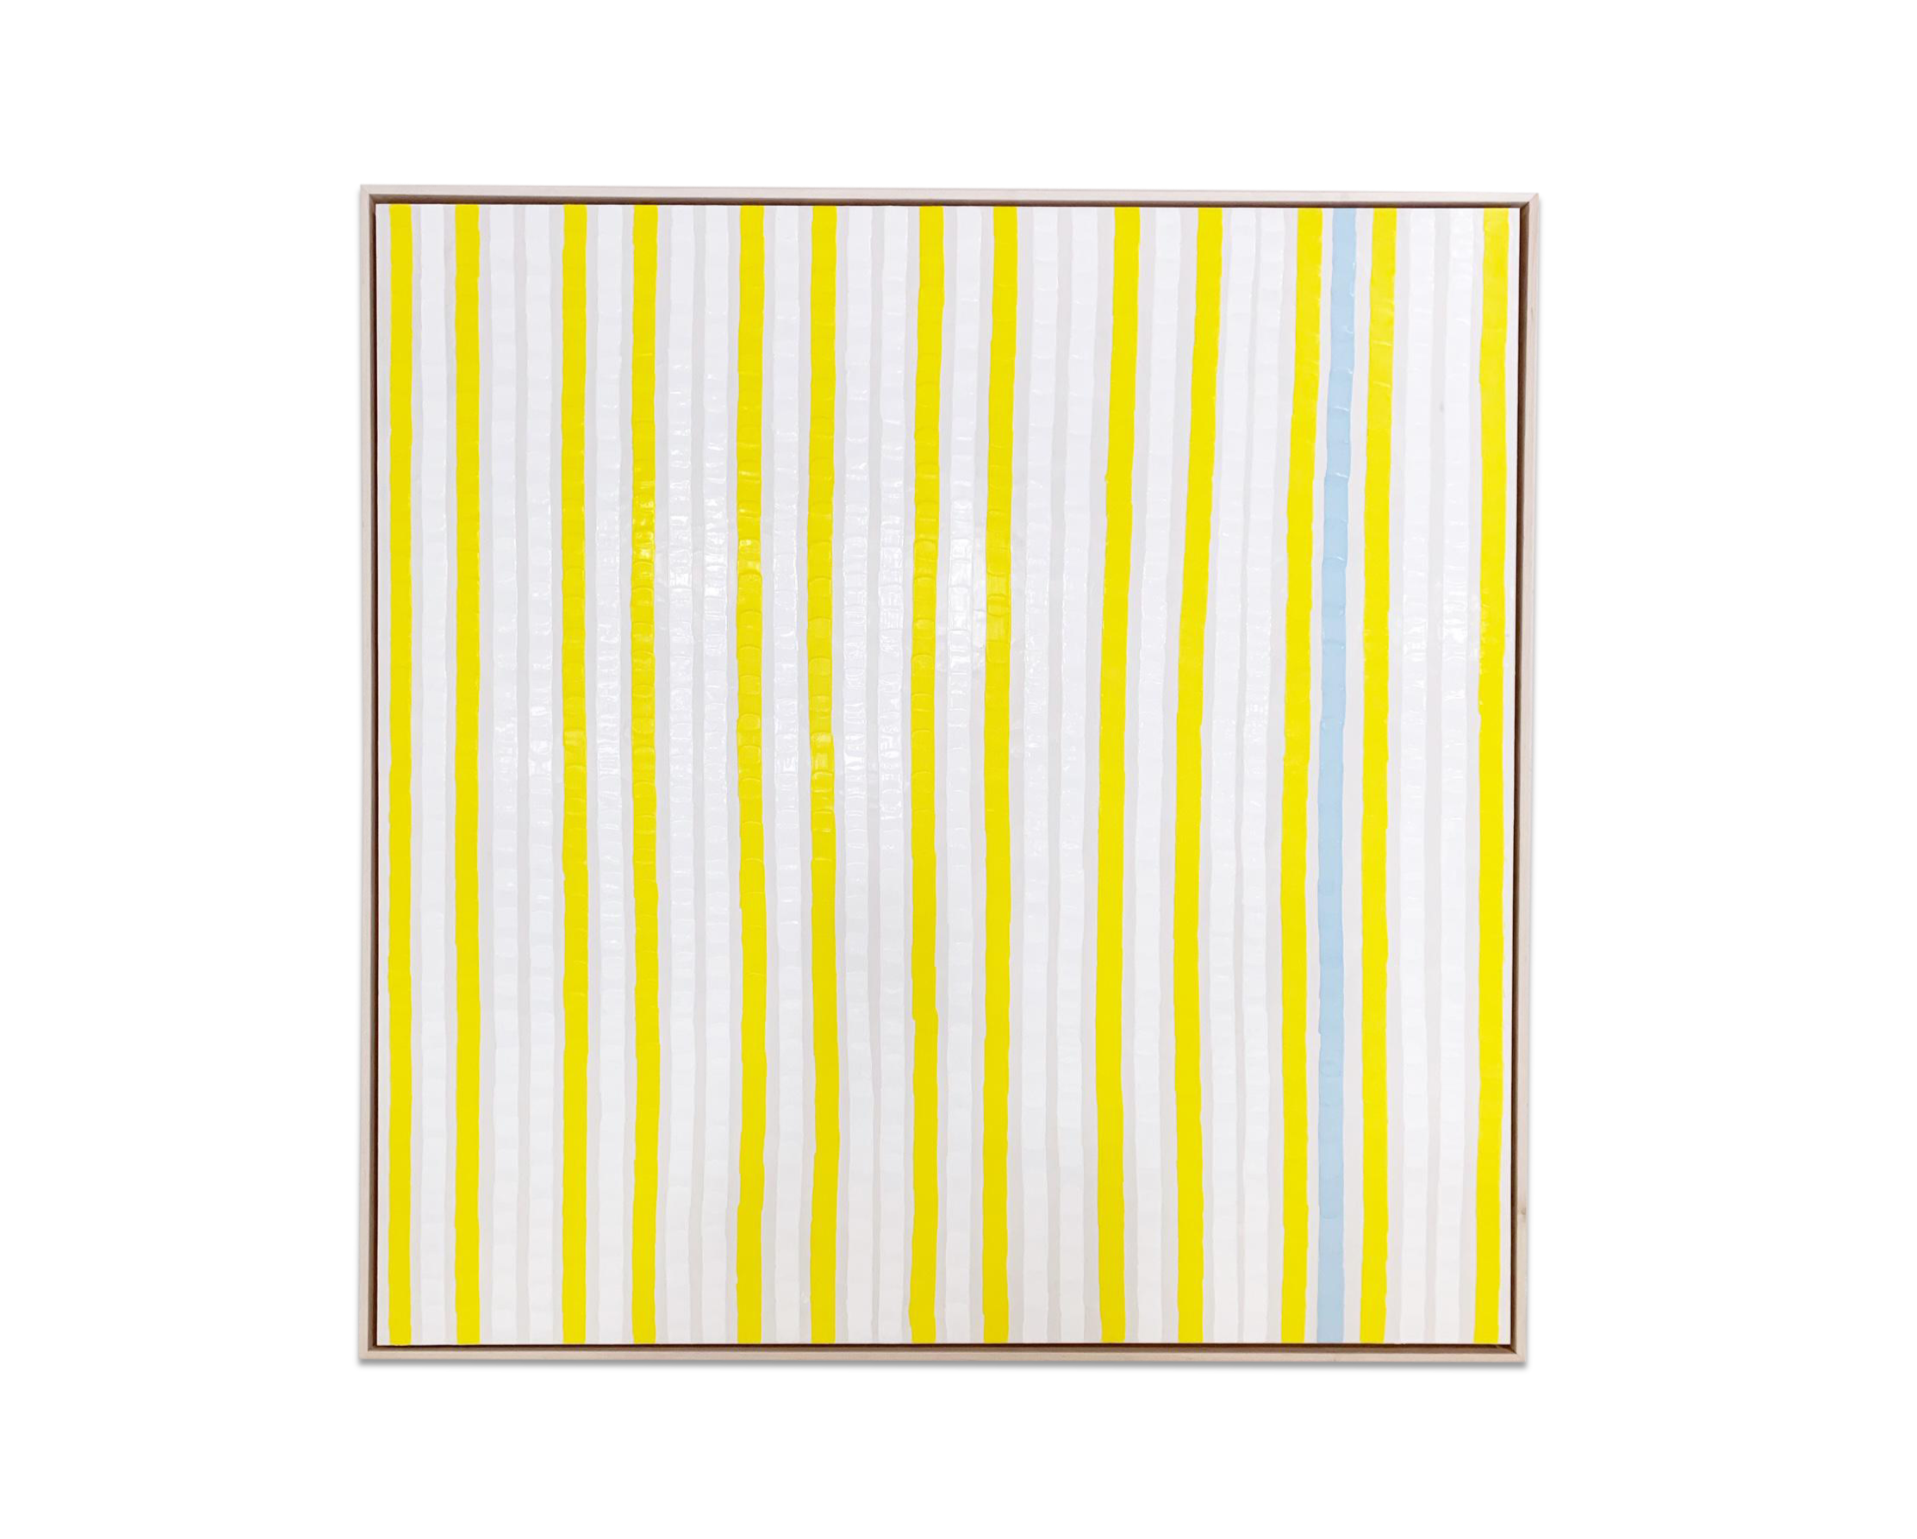 Yellow Stripes. - FORSYTH